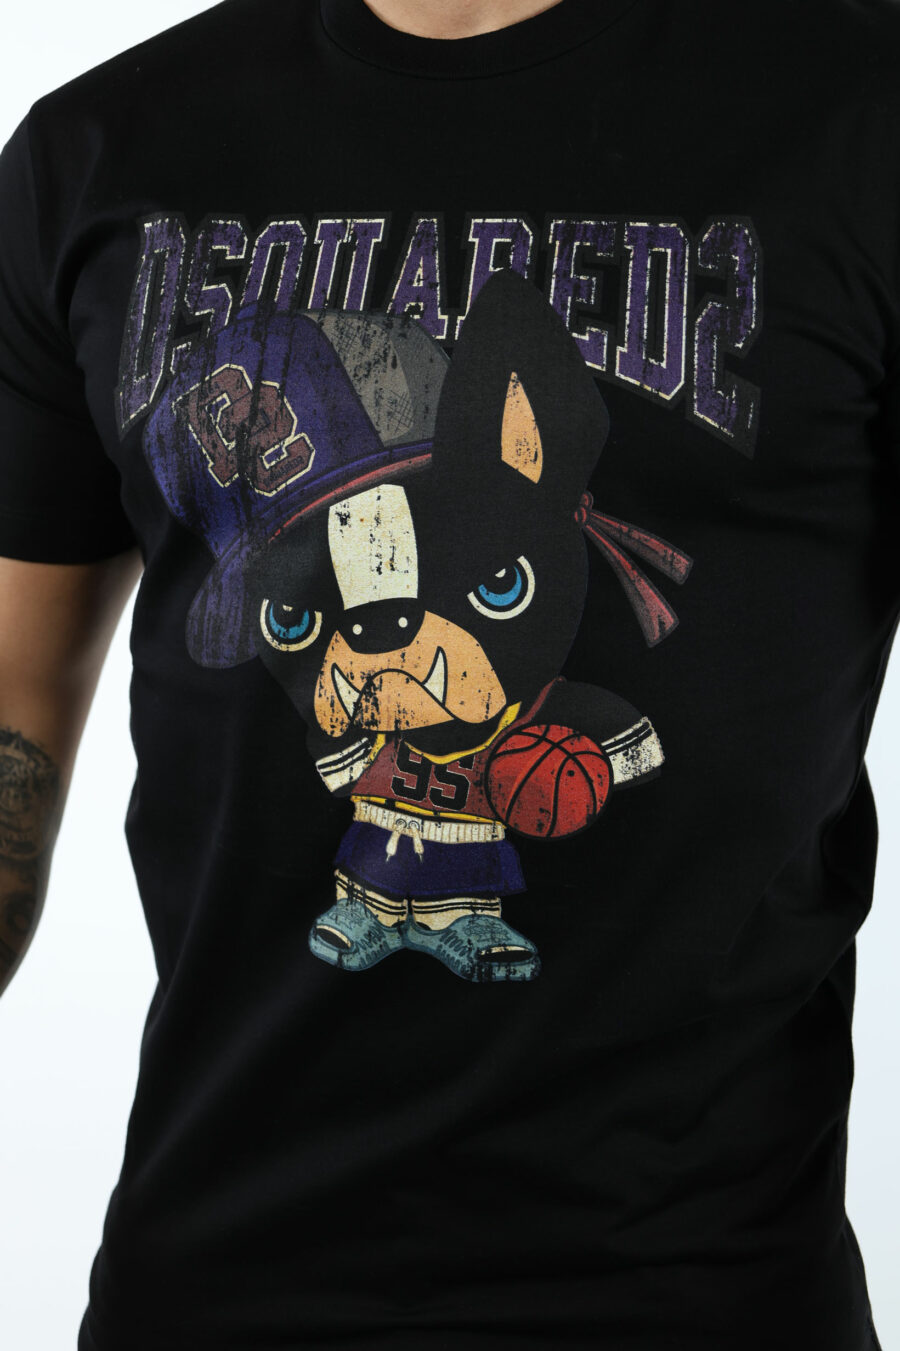 Camiseta negra con maxilogo perro baloncesto - 106894